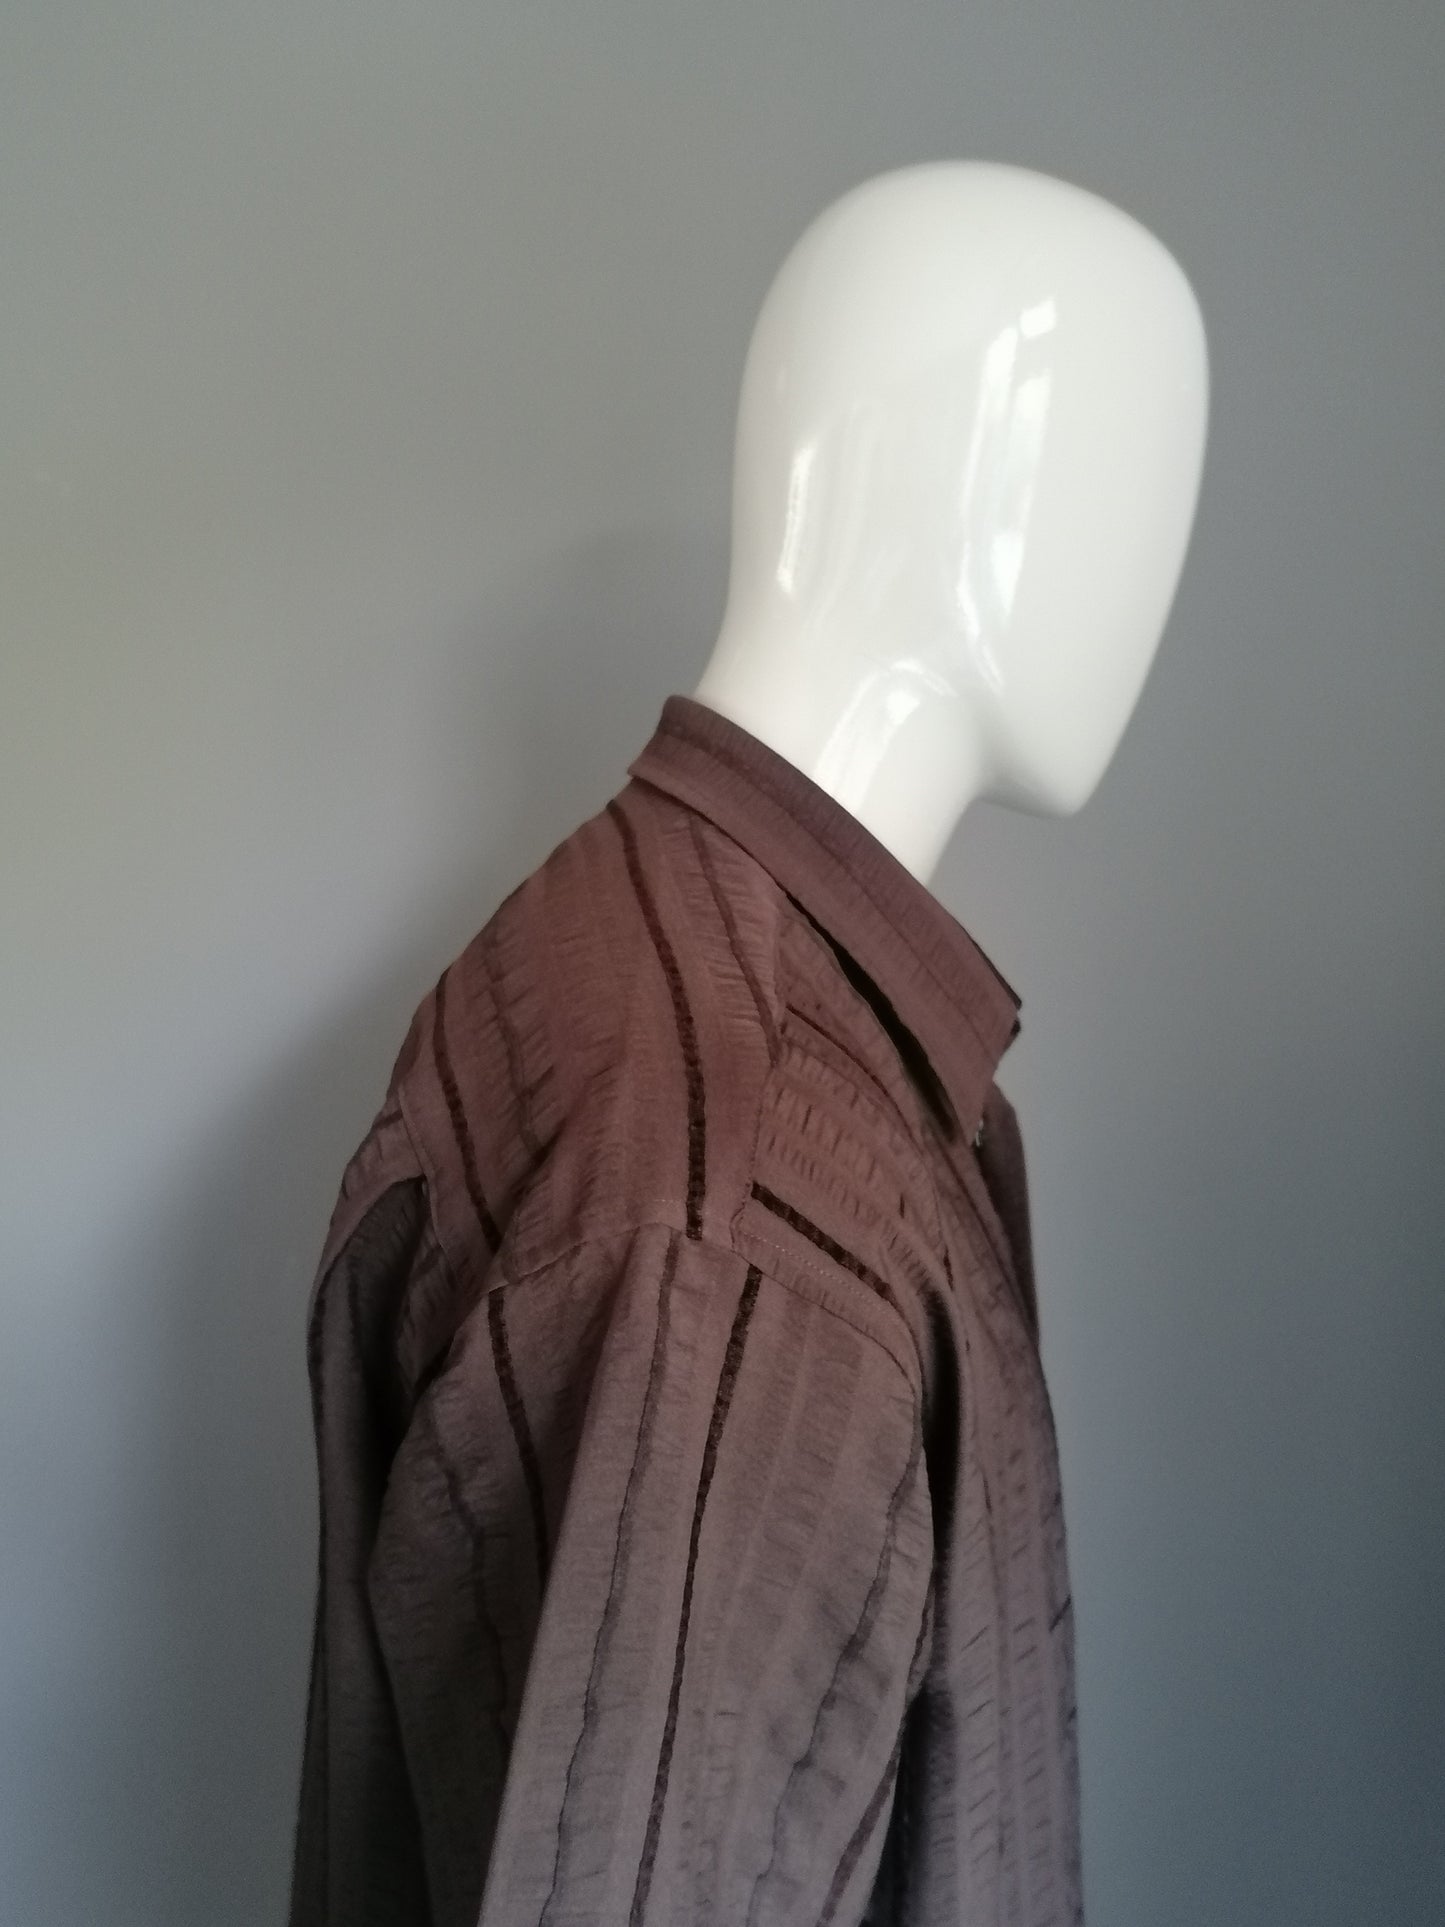 Sleeve corta versace vintace Classic Shirt. A strisce marroni. Moto a costola. Dimensione XXL / 2XL.